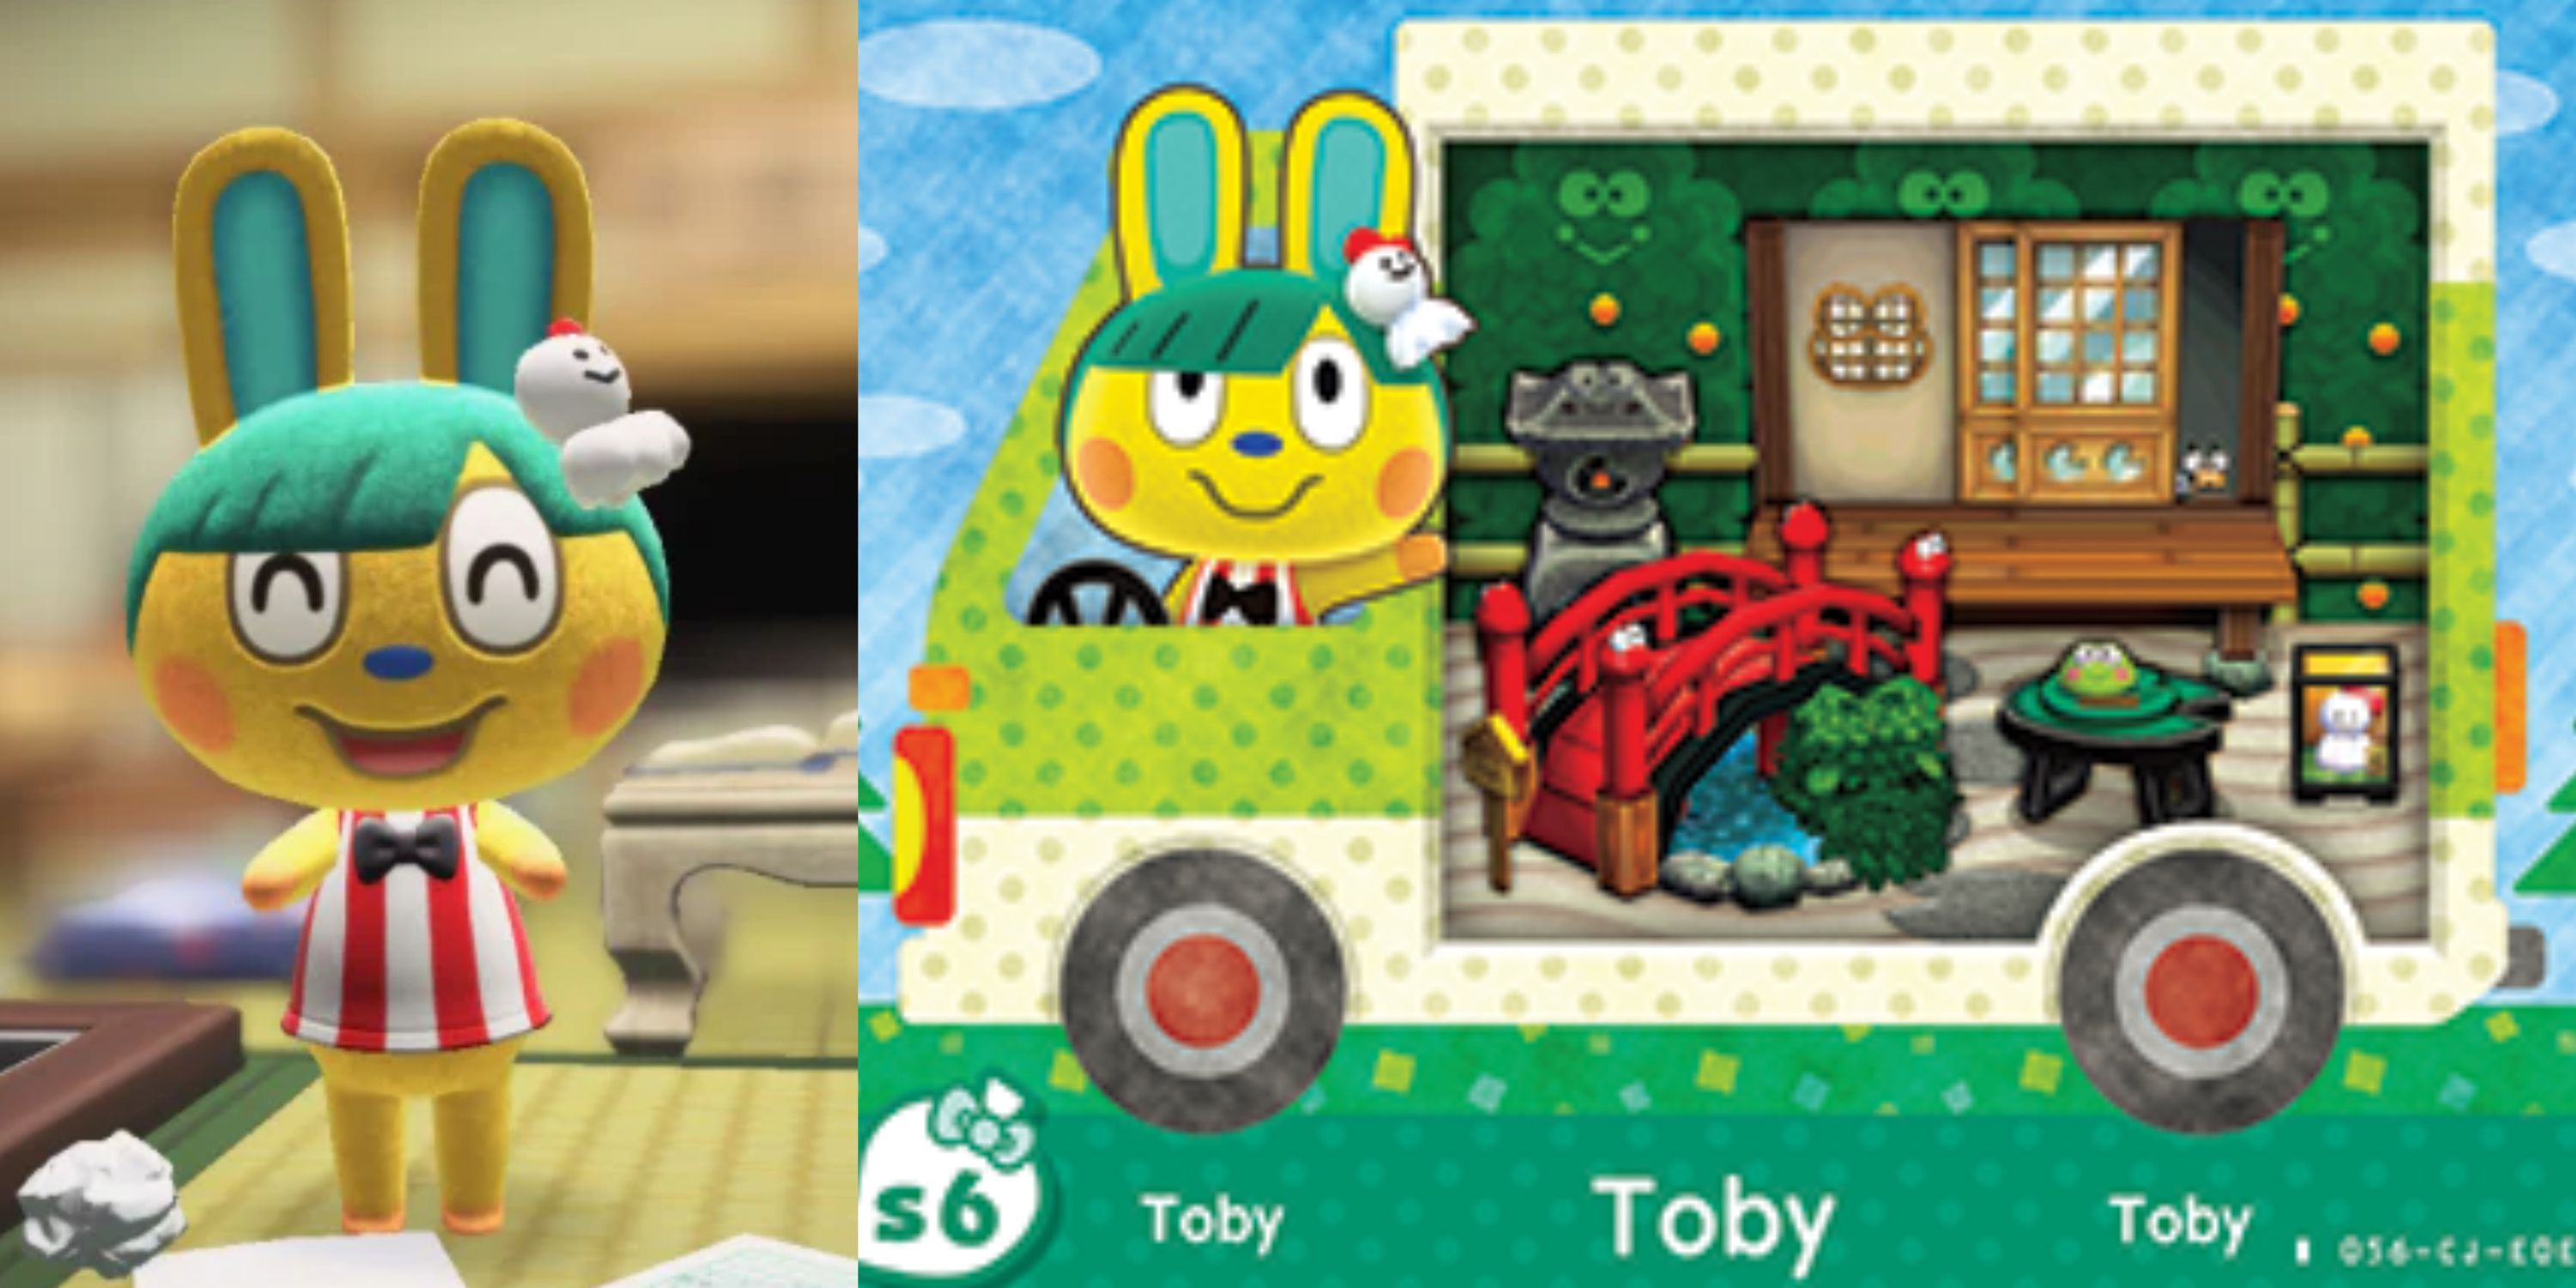 Toby is a Keroppi inspired Rabbit villager